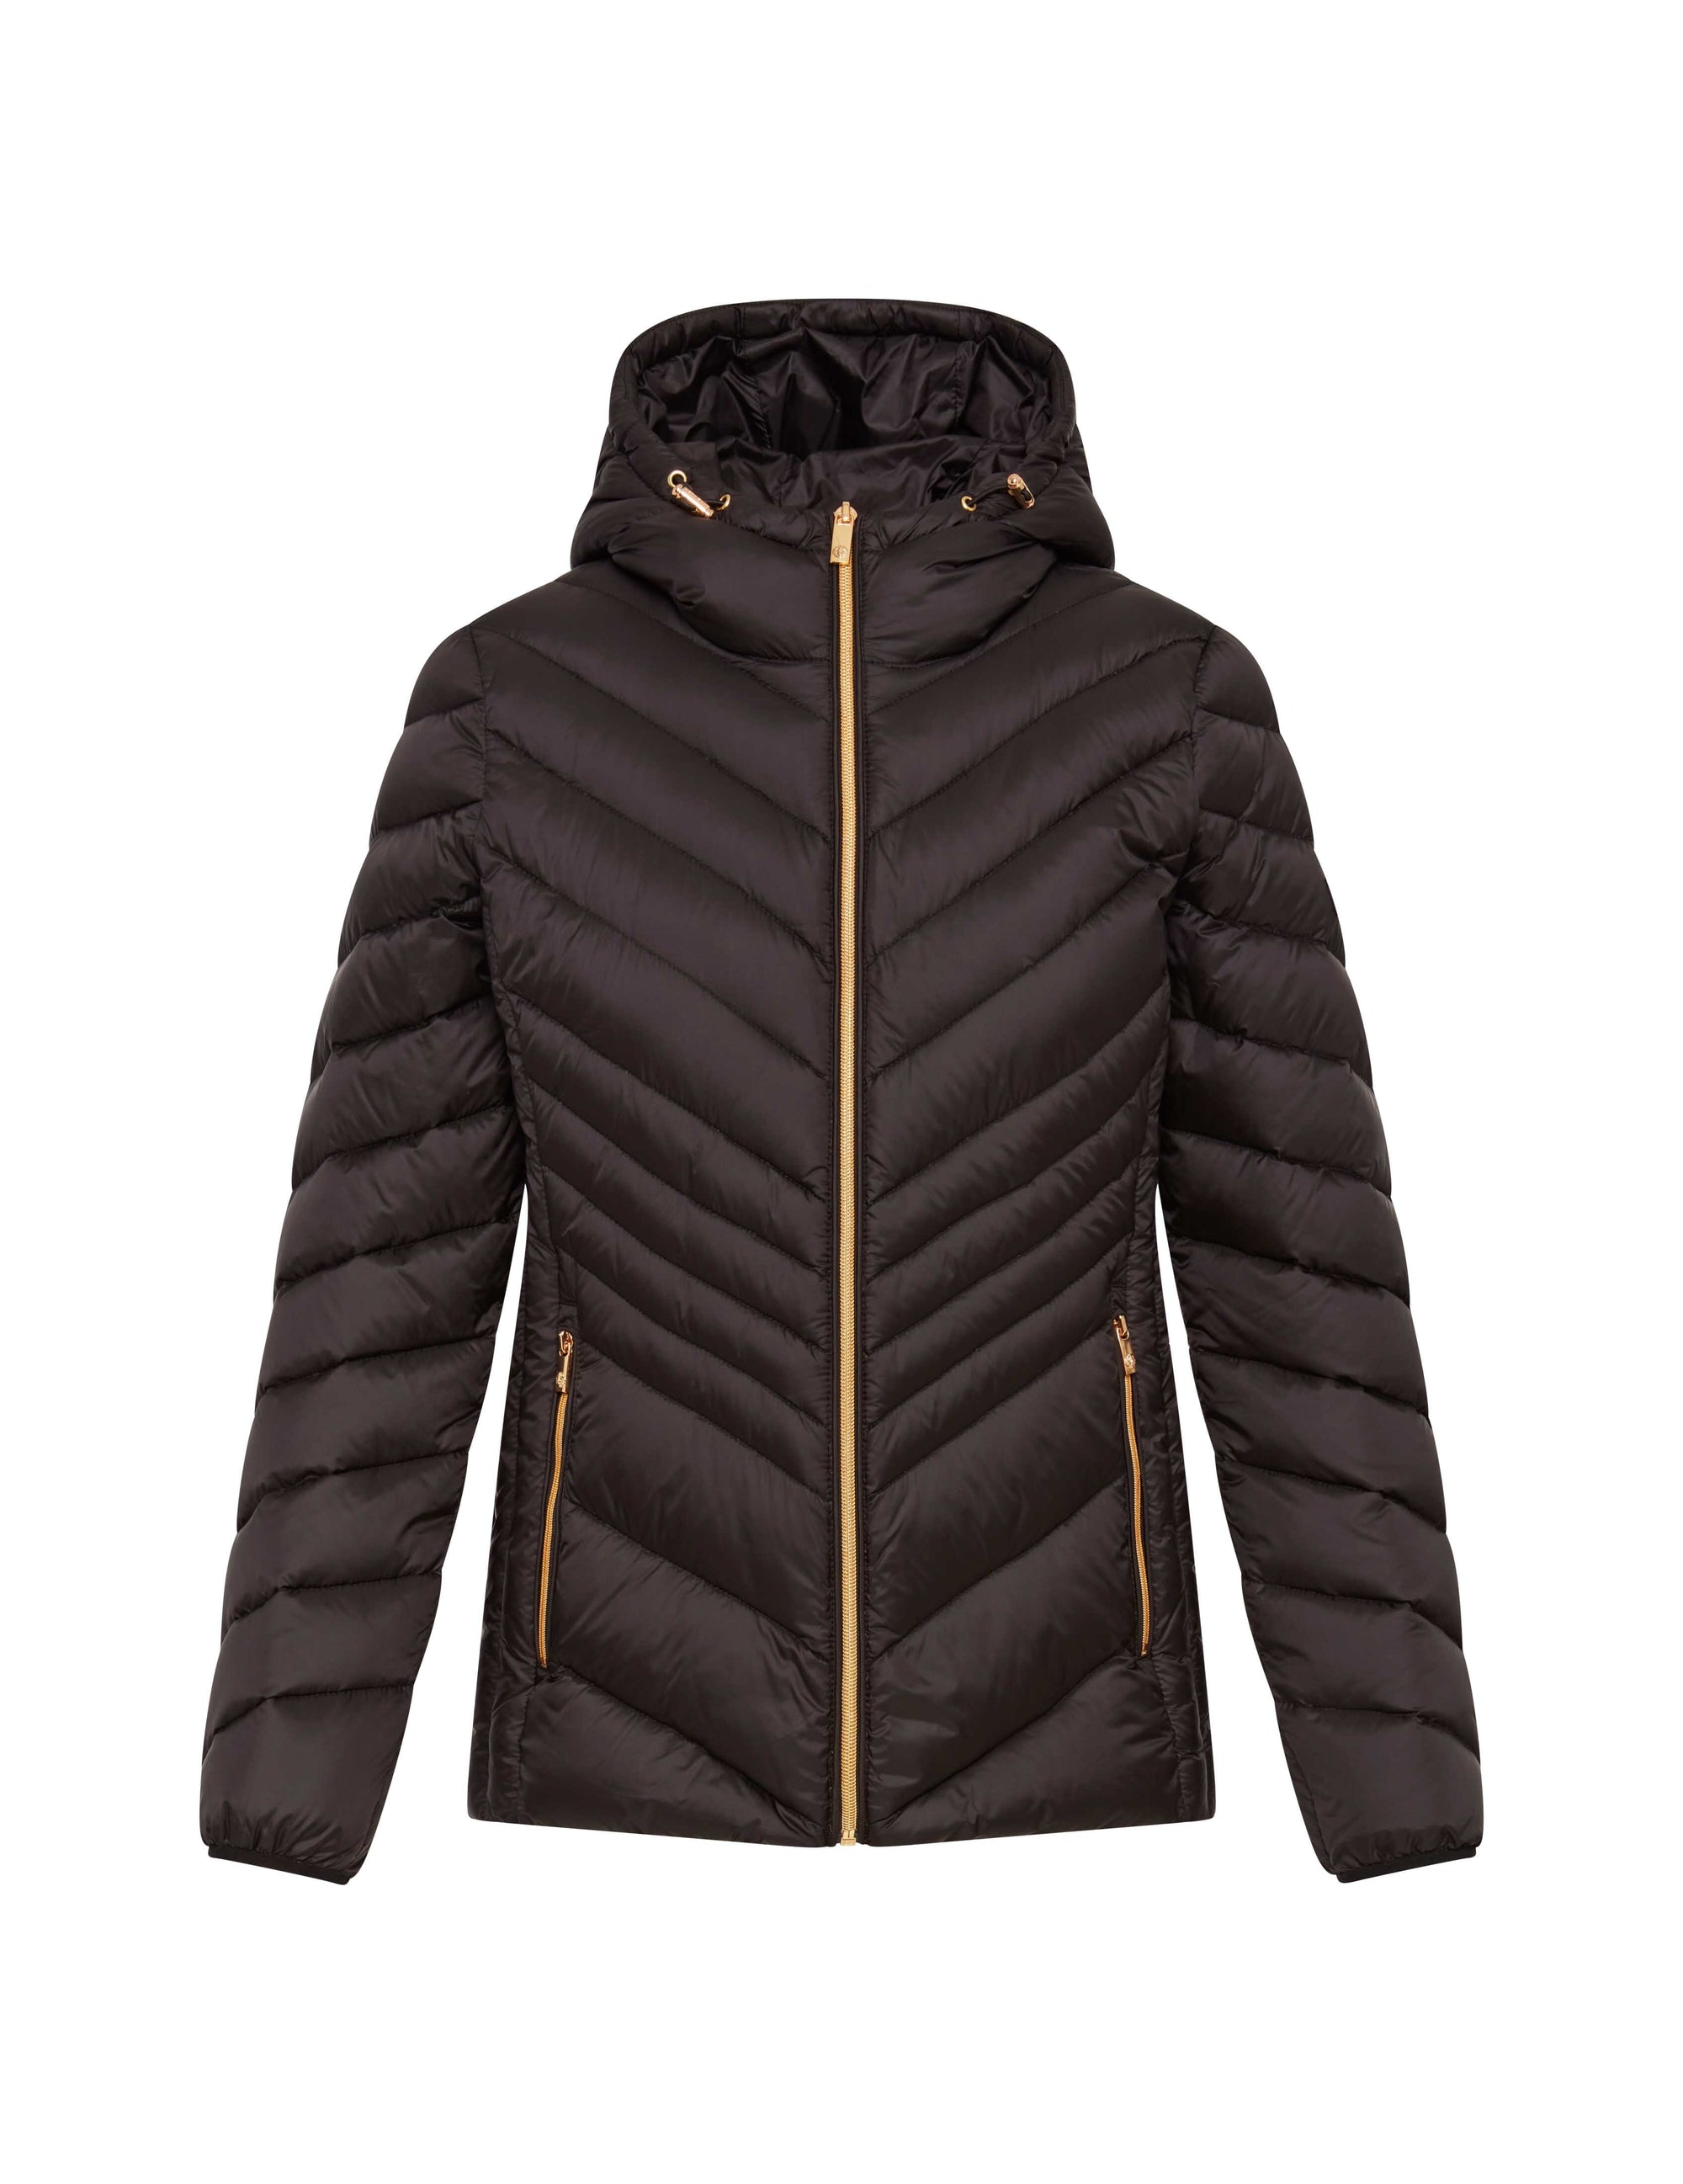 Michael Kors Women's Hooded Packable Down Puffer Coat, Created For Macy's  Reviews Coats Jackets Women Macy's 